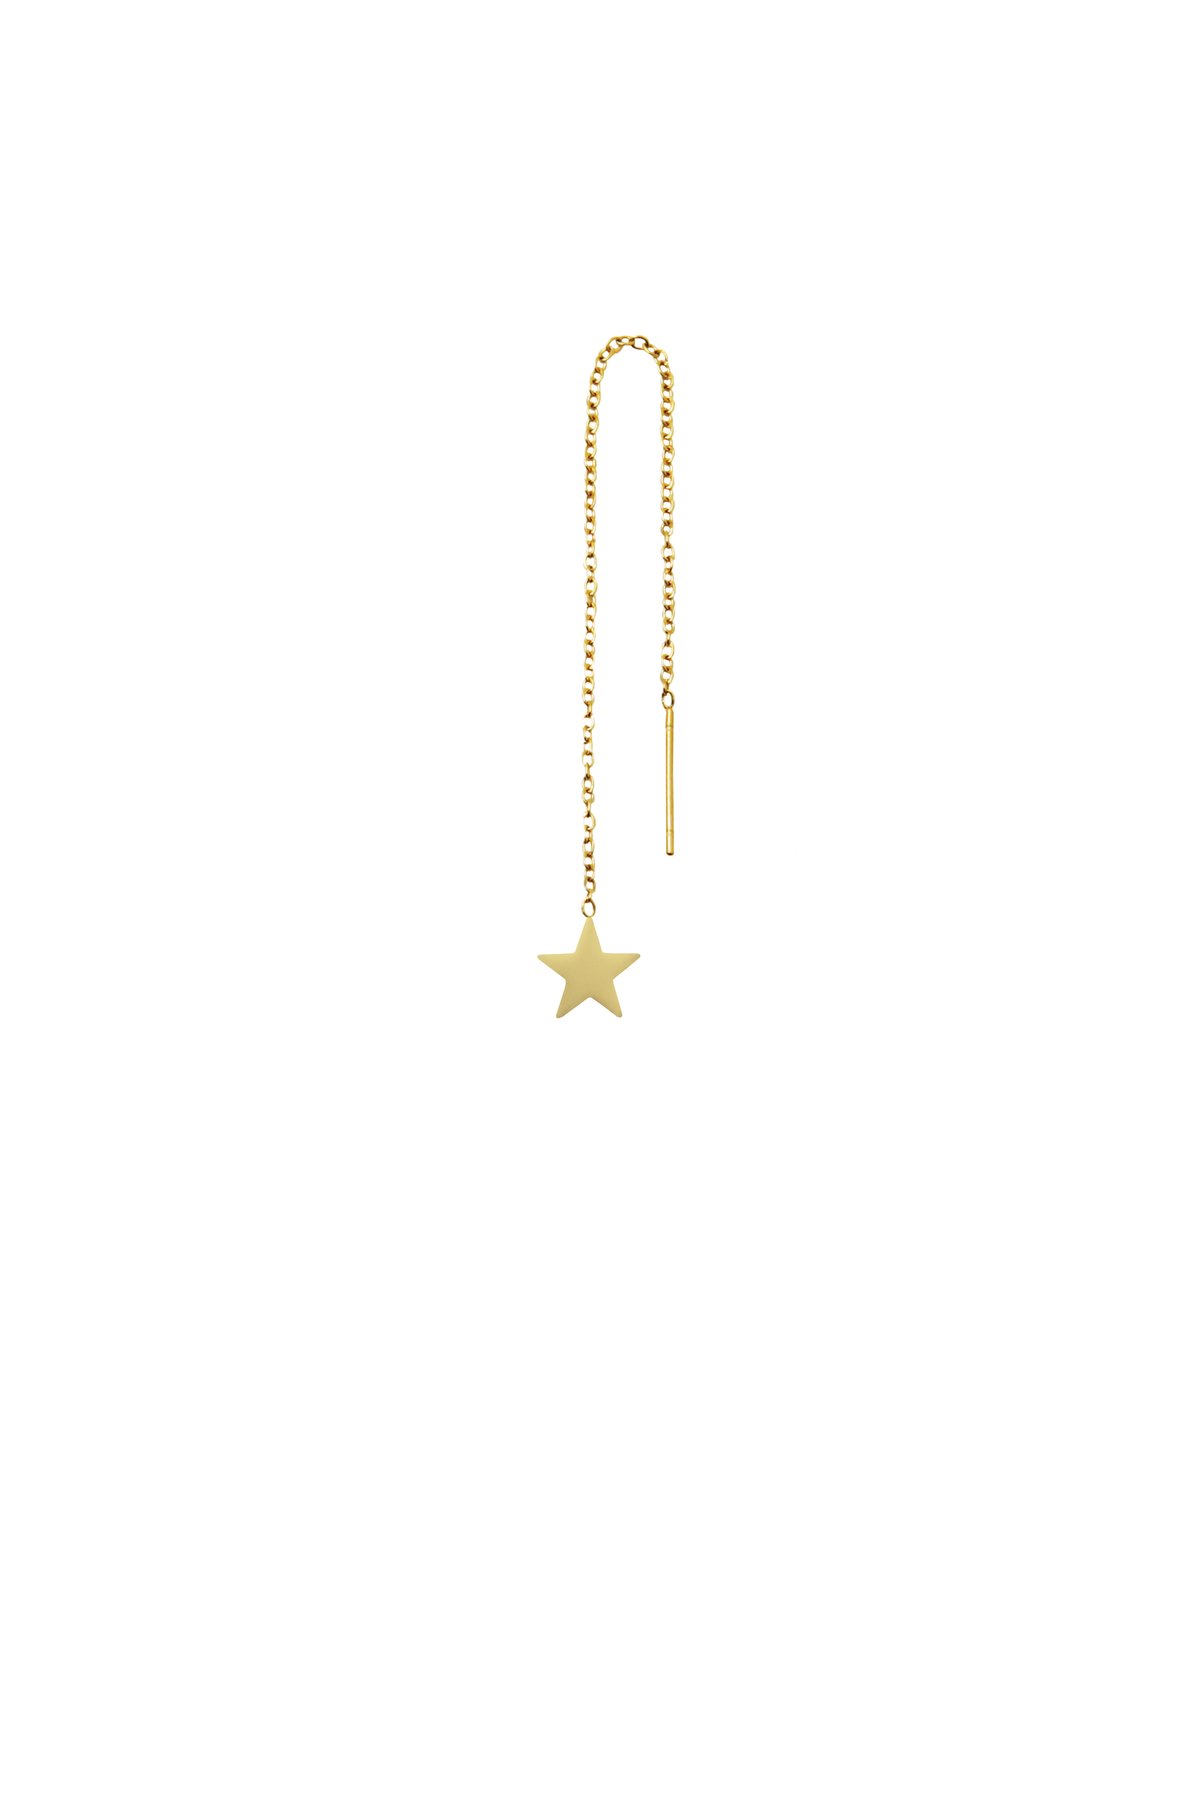 Image of Petit étoile saliscendi・gold